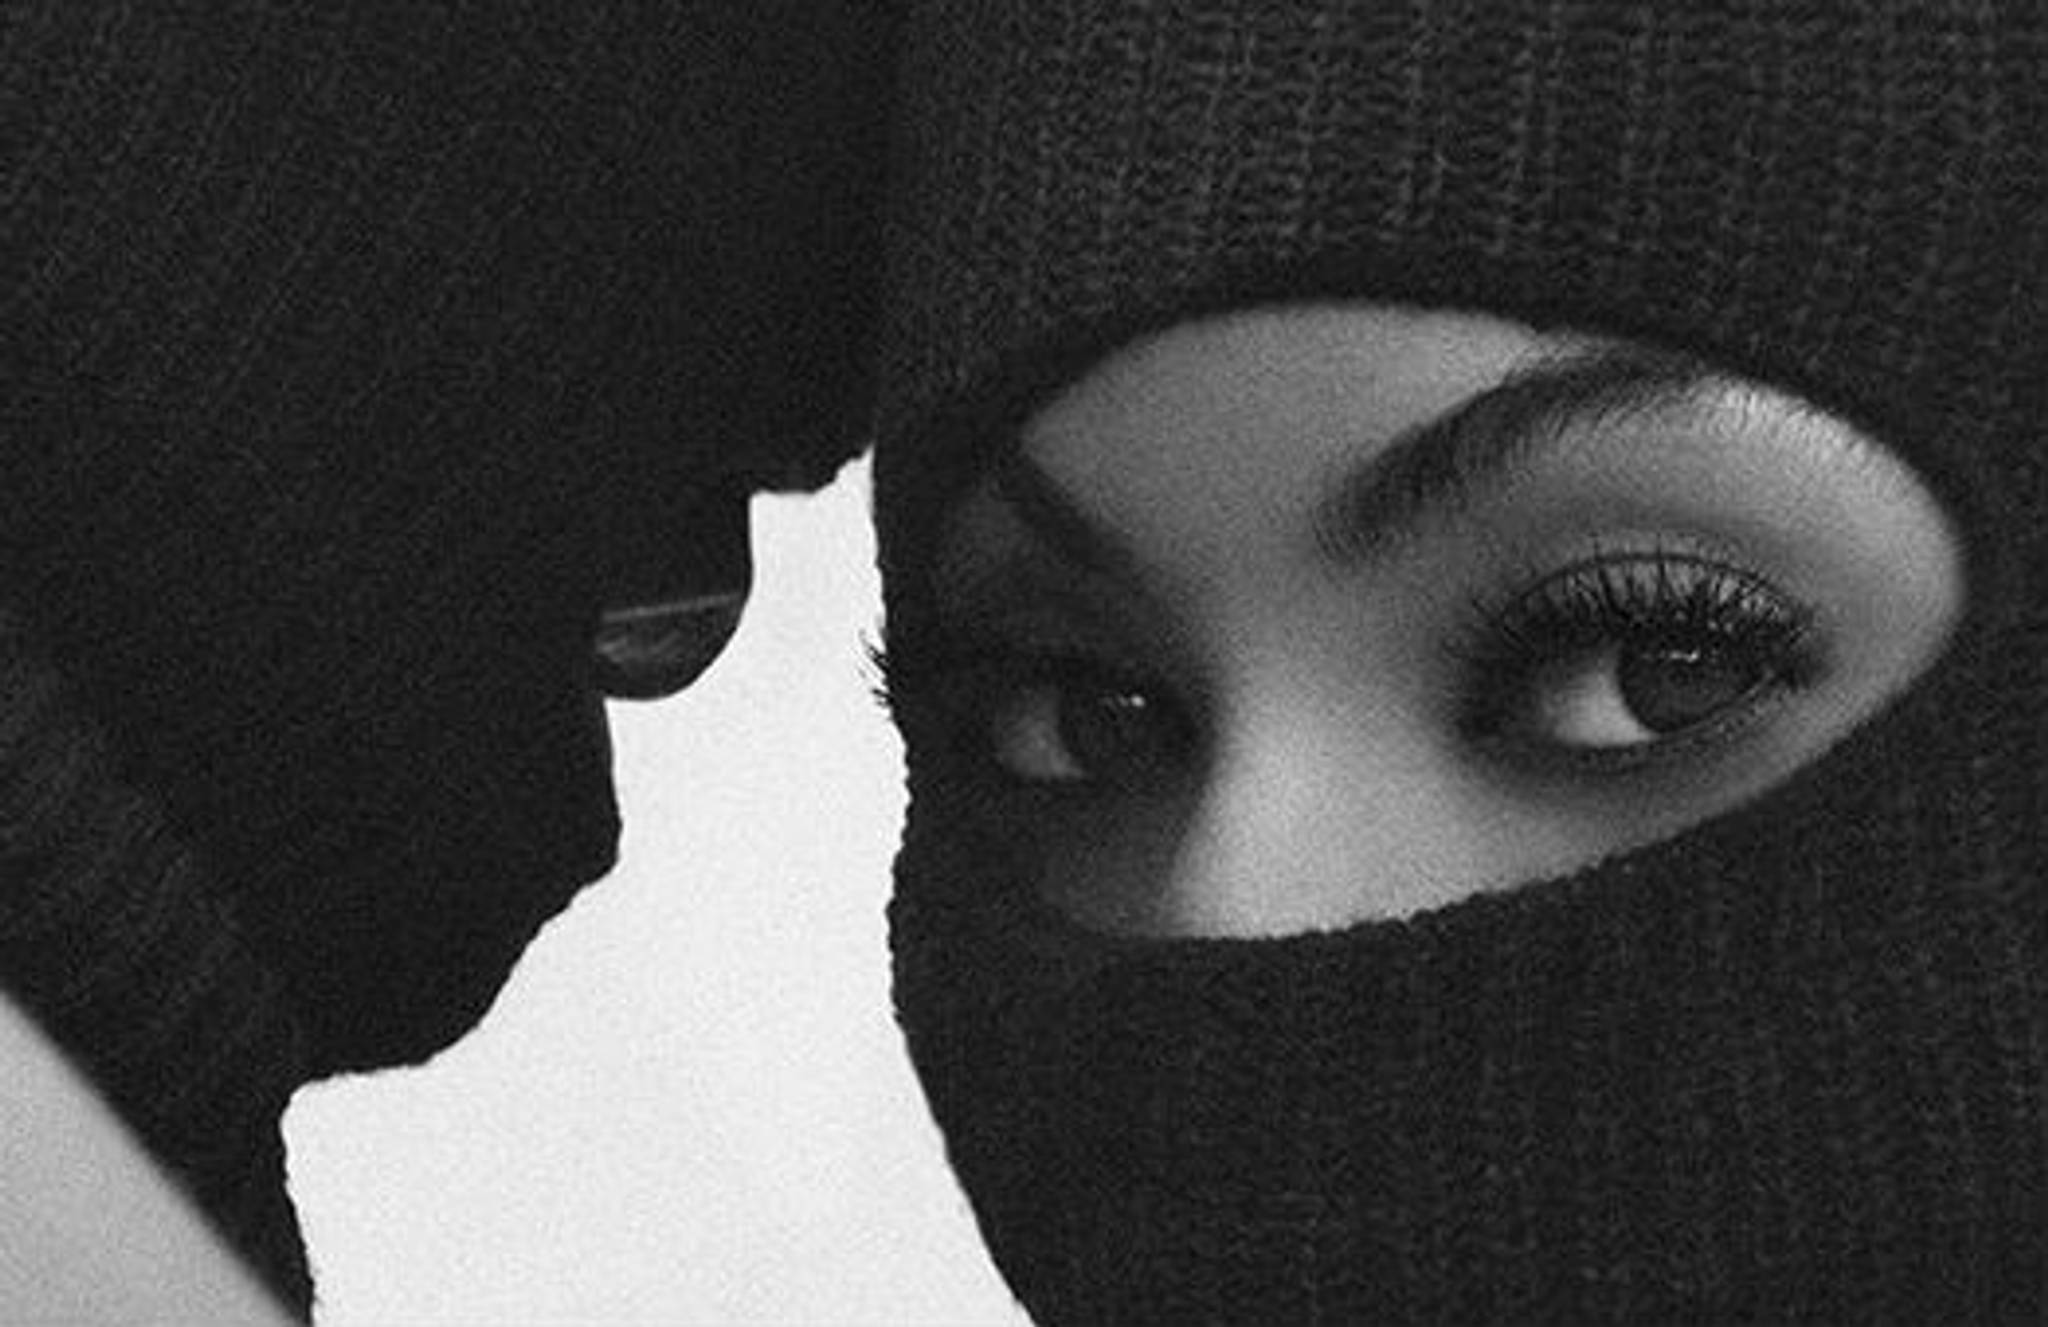 Beyoncé and Jay Z's epic tour trailer